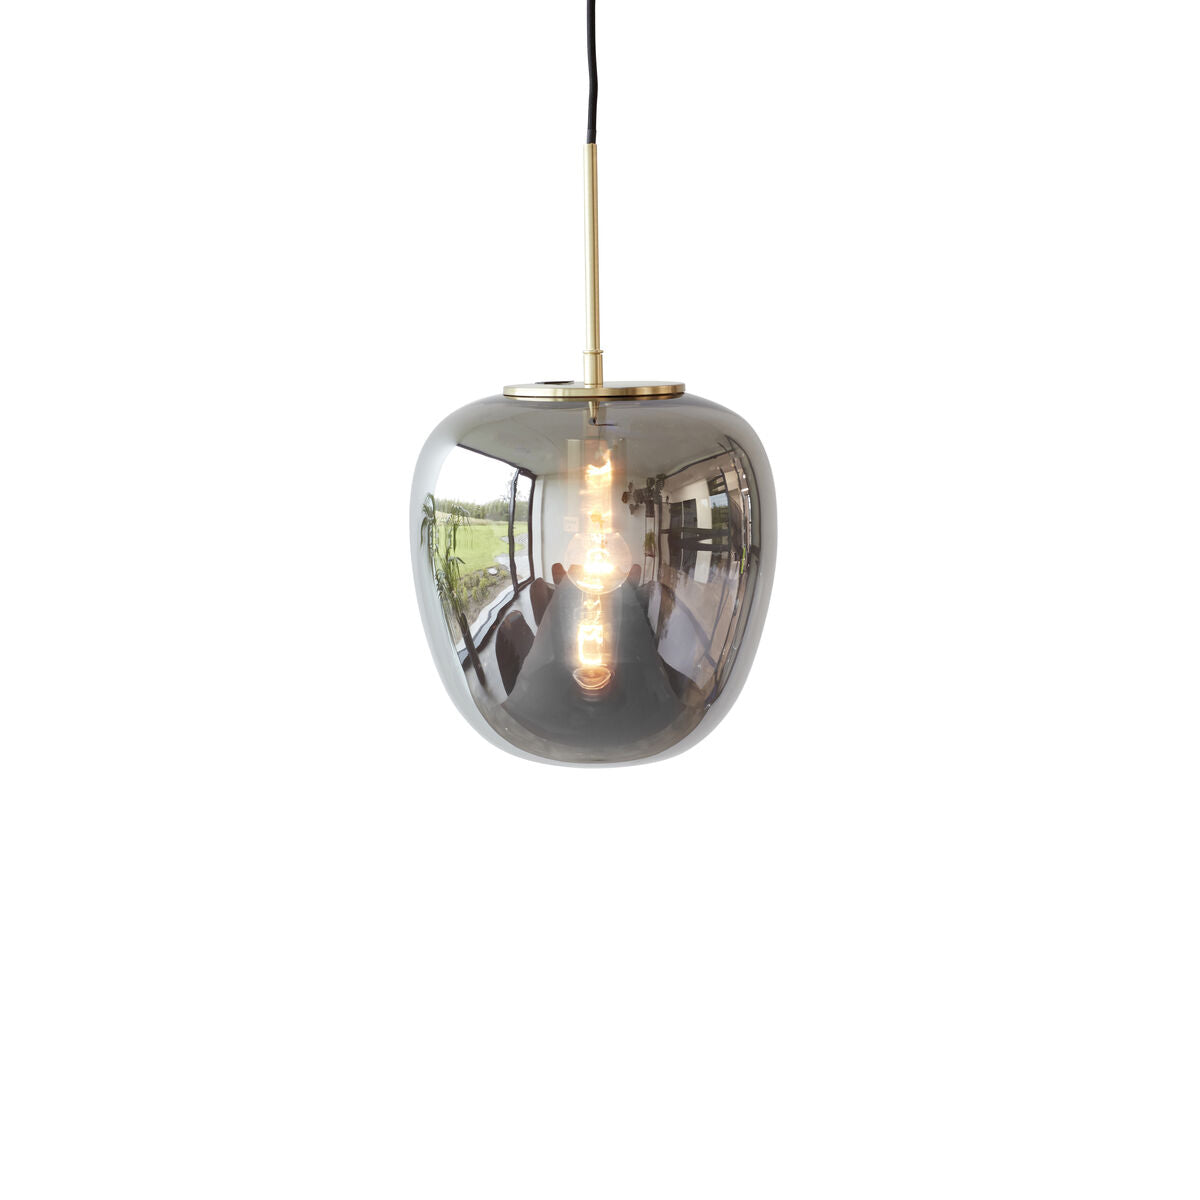 Hübsch - Lampe, Glas, Spiegel/Messing - Ø30xh36cm, E27